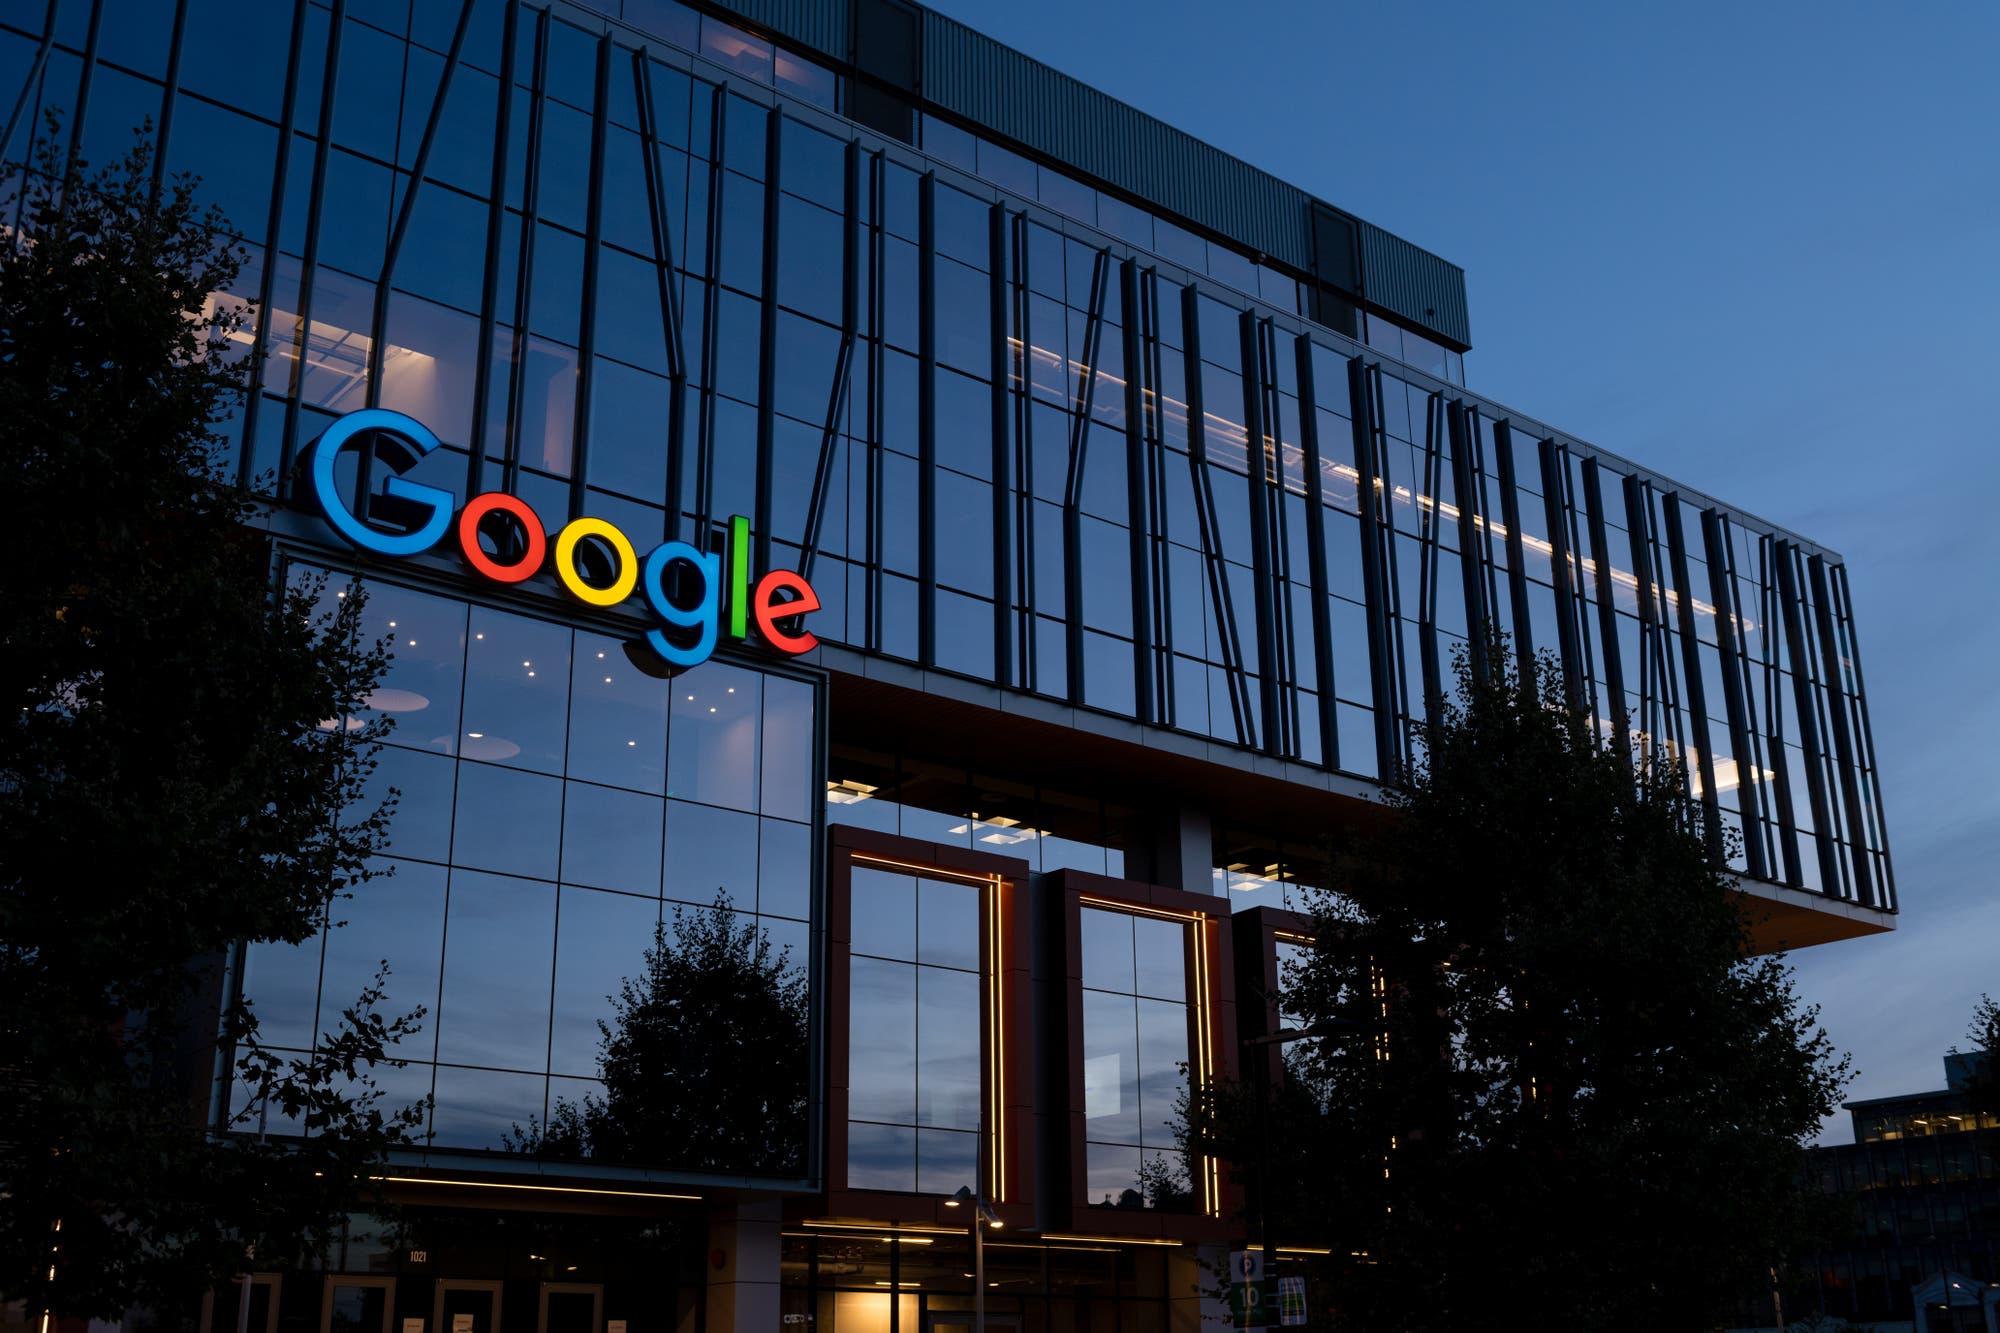 Google-Gebäude in Seattle